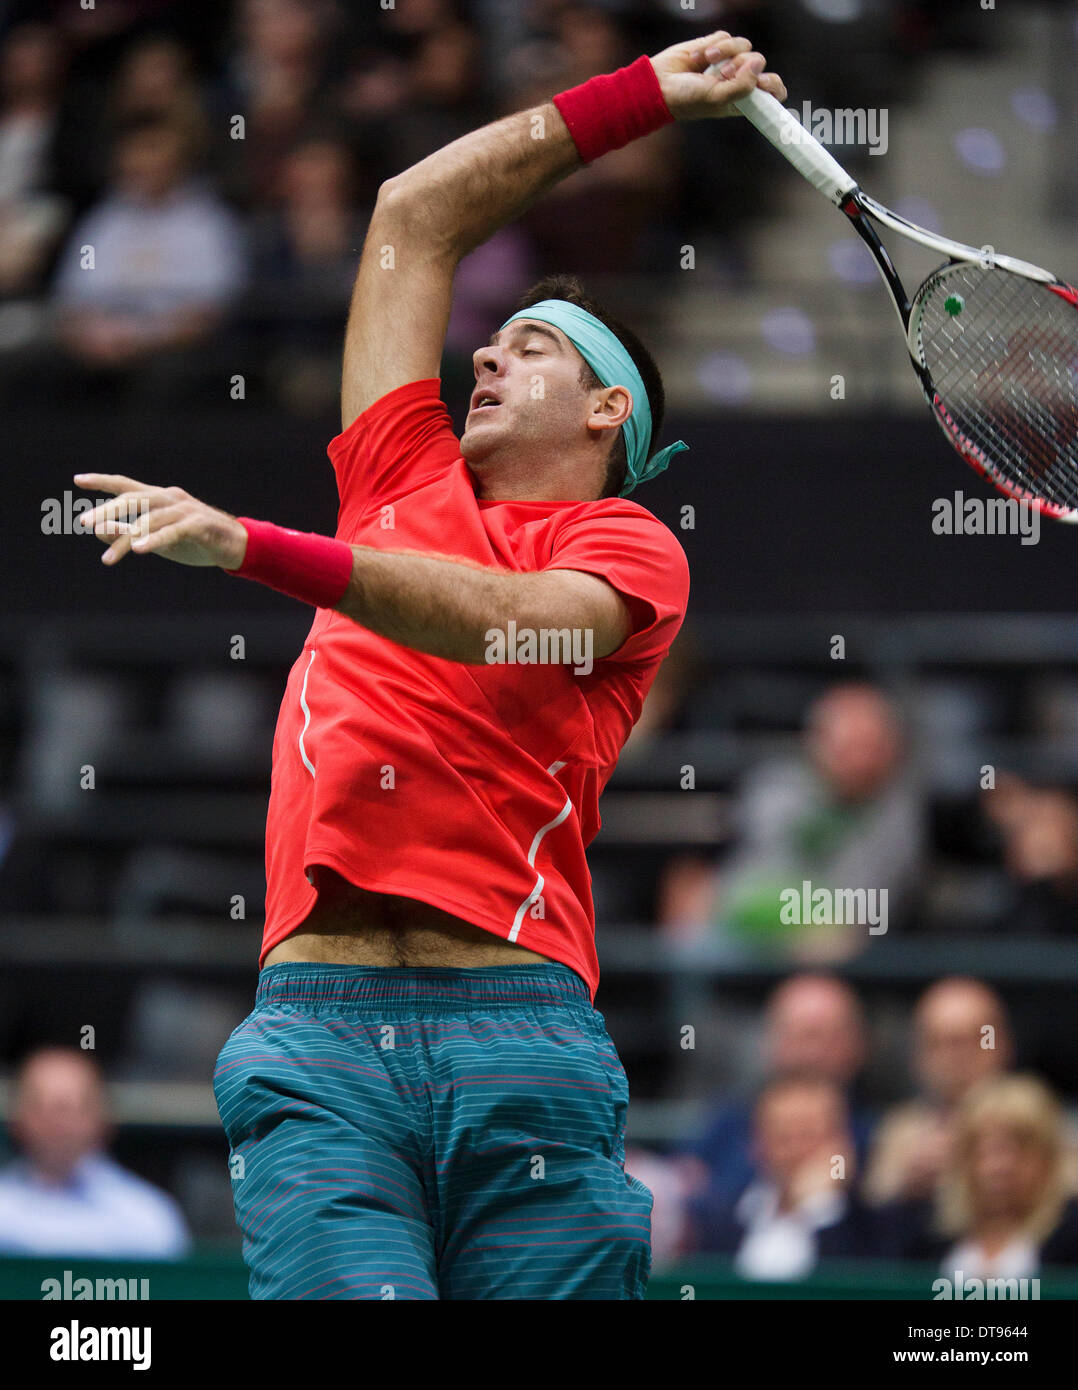 Juan Martin Del Potro(ARG) in seinem Match gegen Gael Monfils(FRA) Credit: Tennisimages/Henk Koster/Alamy Live News Stockfoto